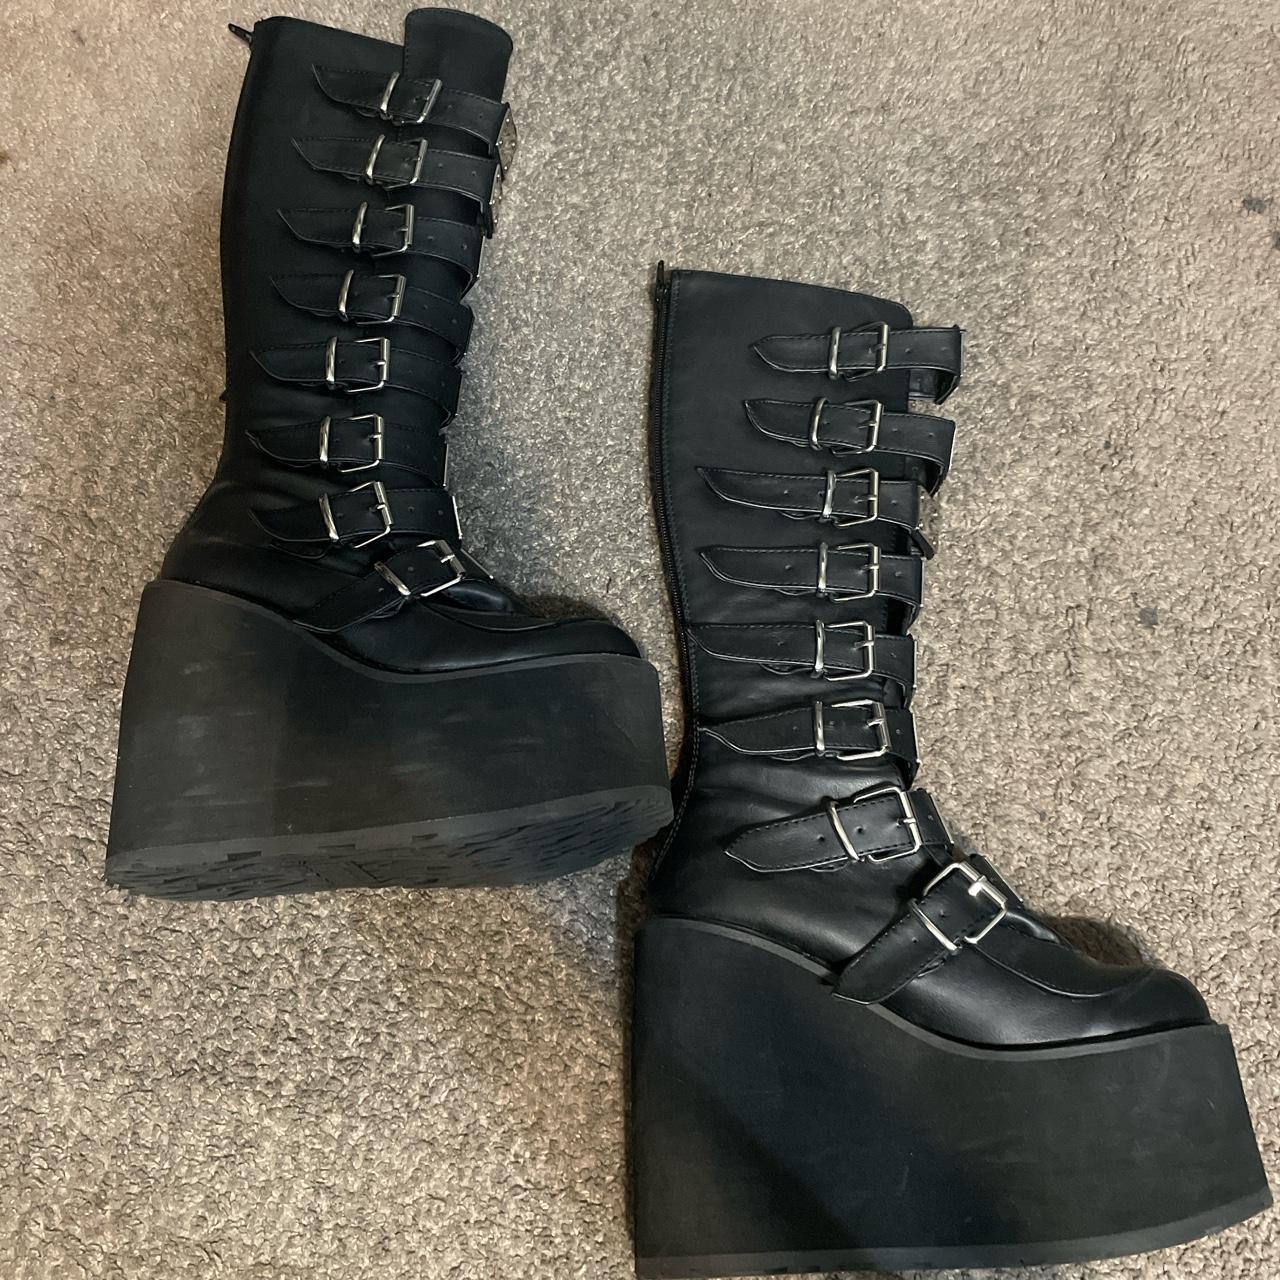 Product Image 2 - Demonia platform boots. Size 8.